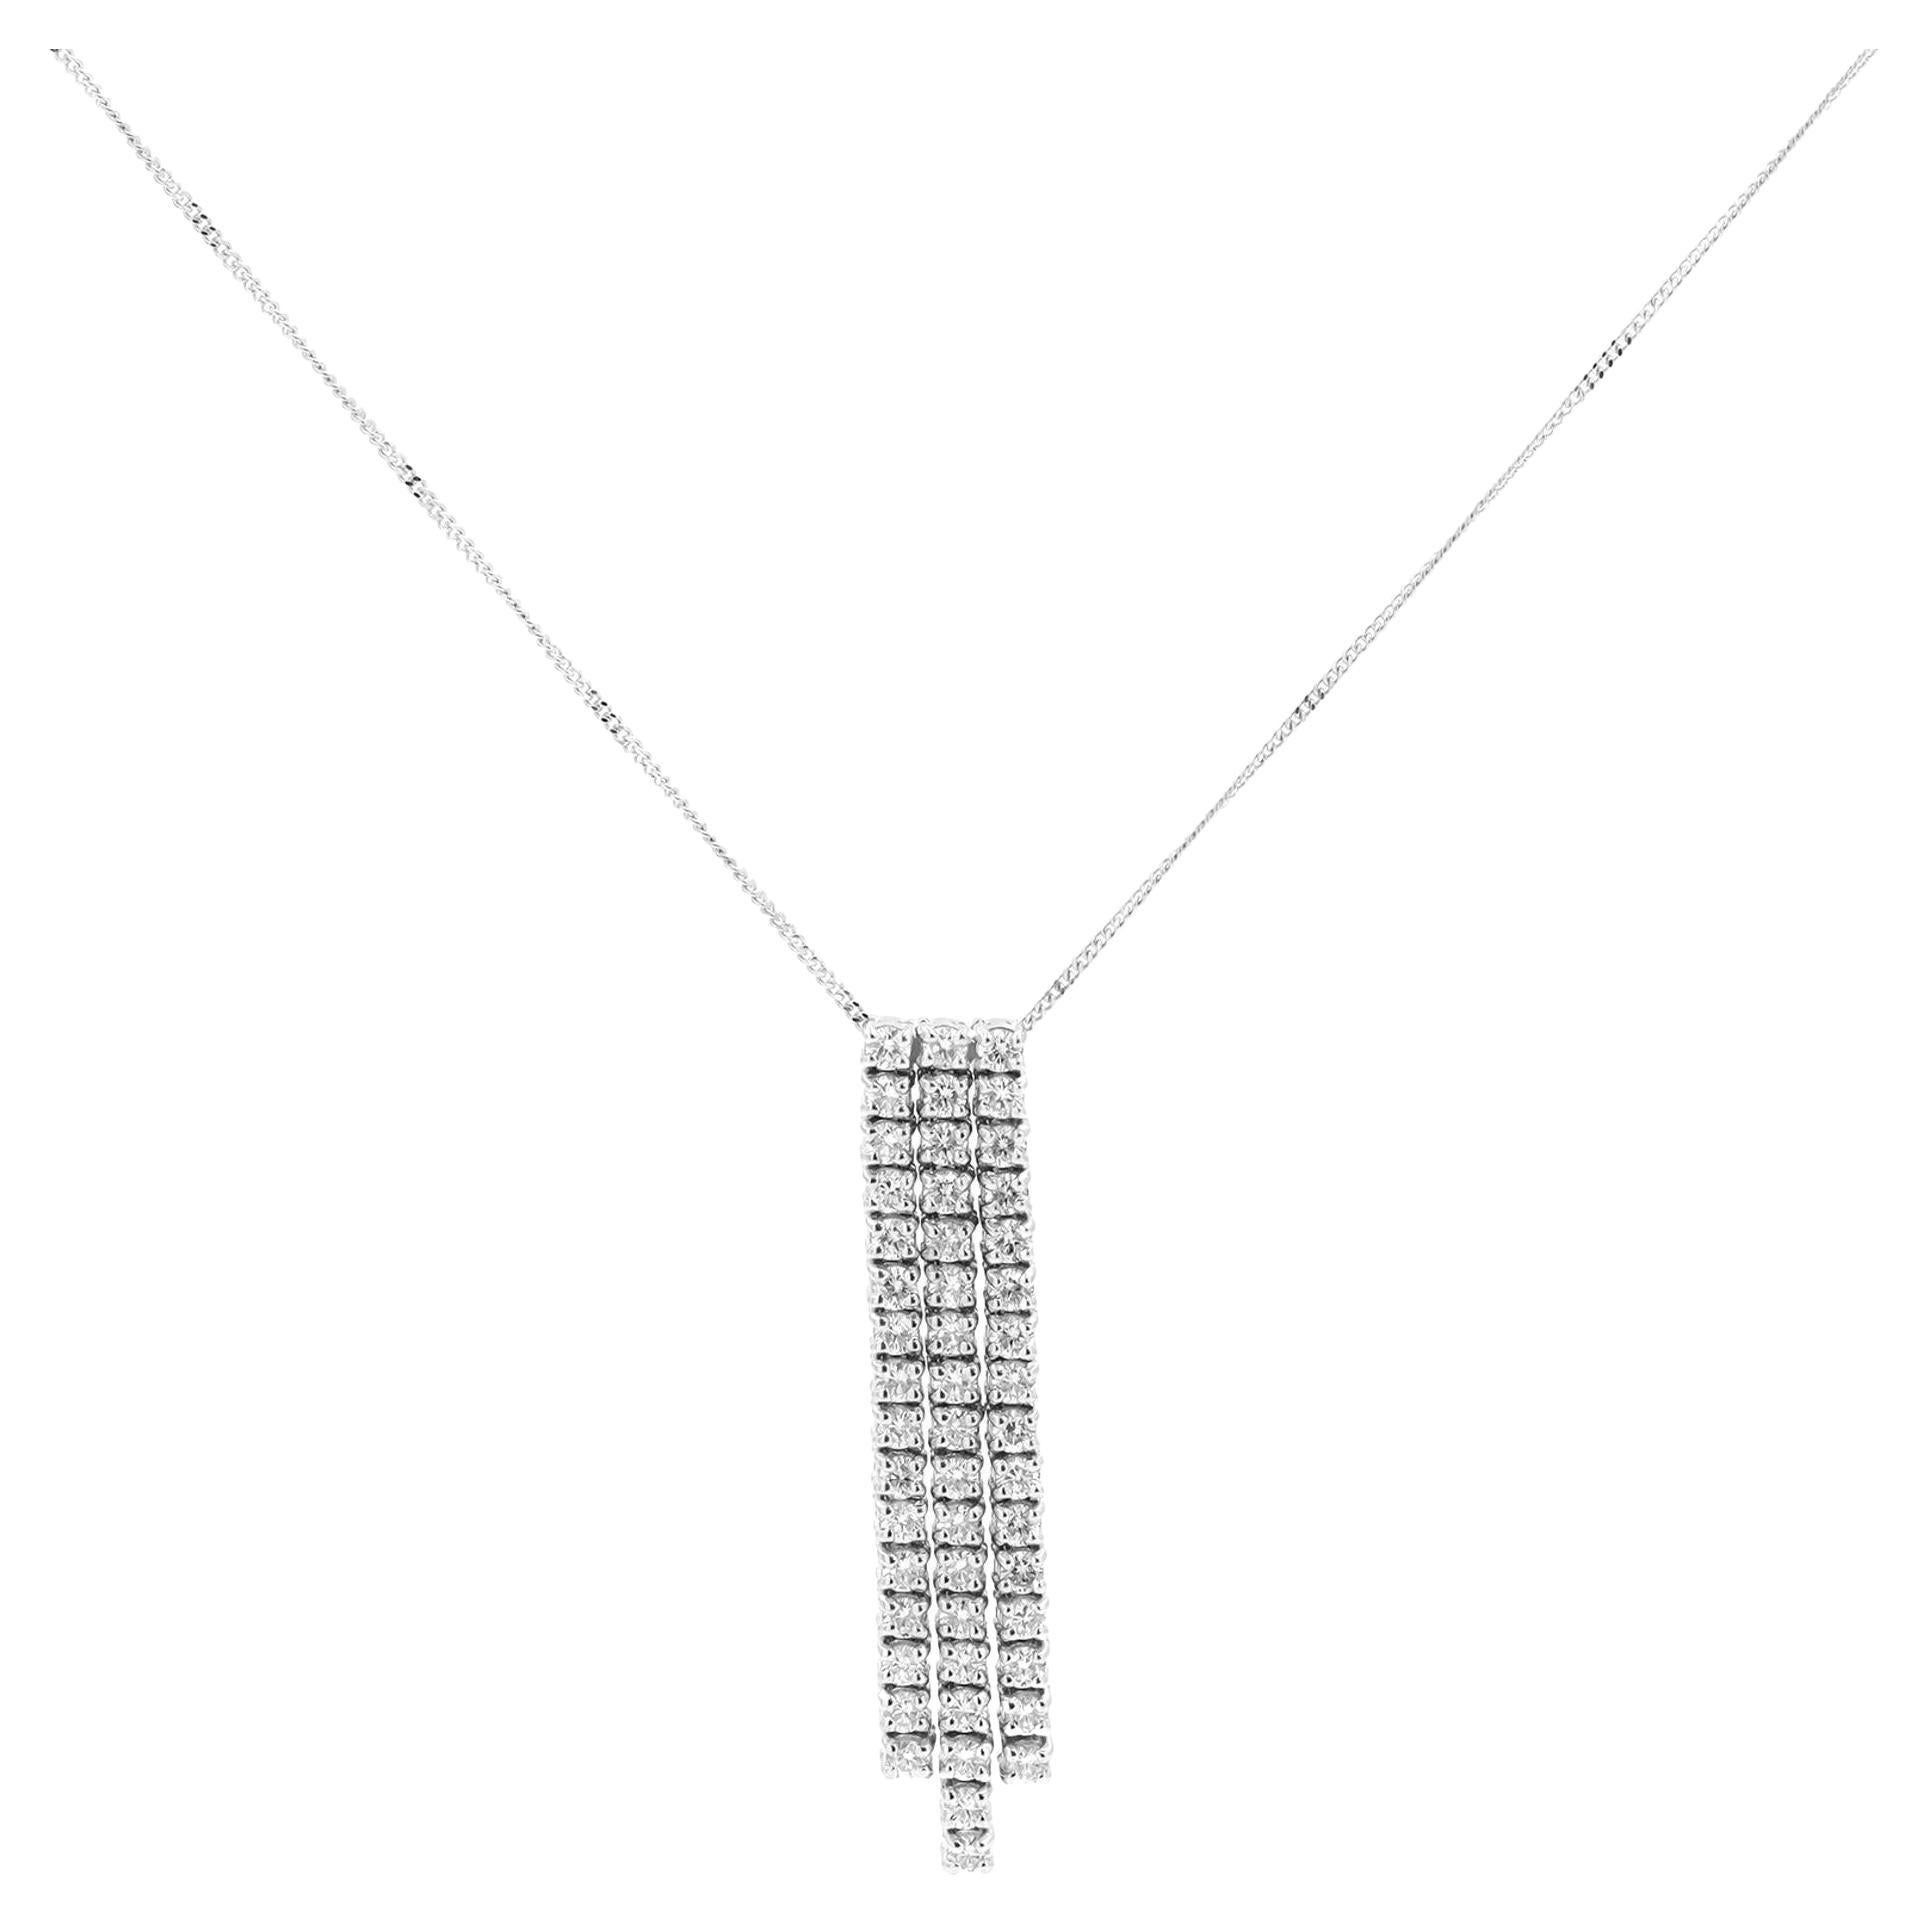 Piero Milano Natural Diamond Drop Pendant Necklace 18K White Gold 1.68cttw